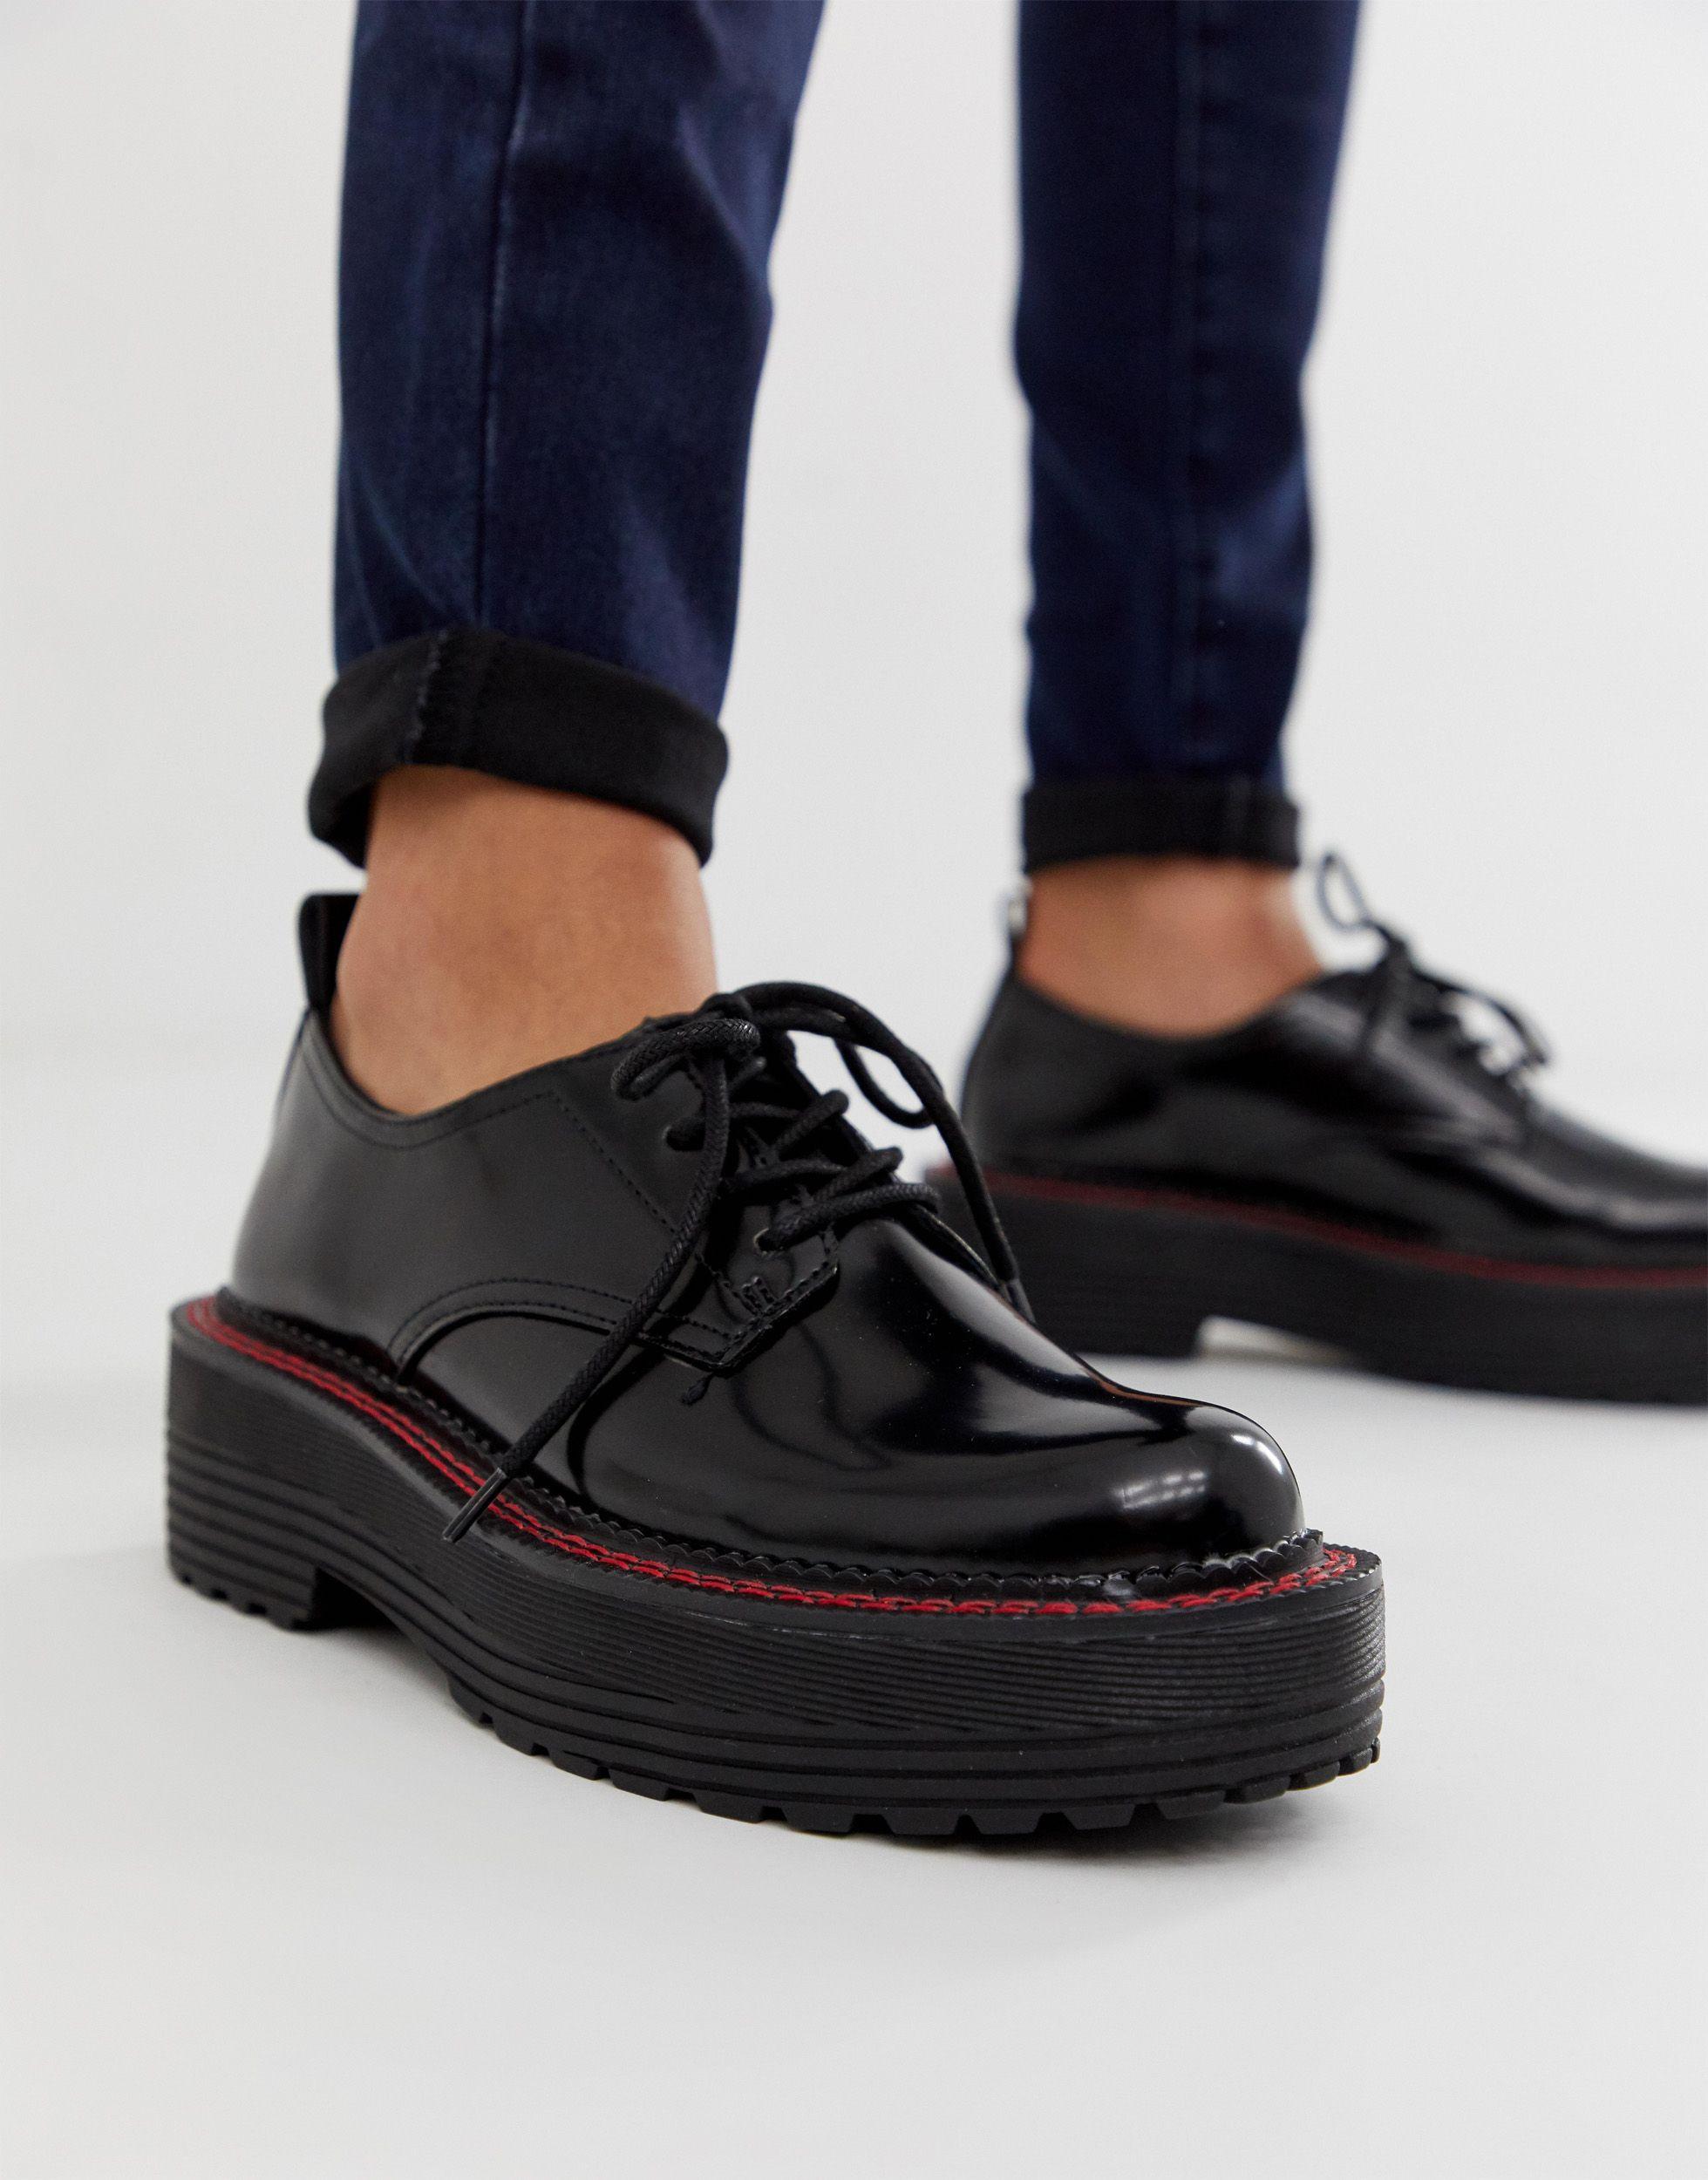 Мужские туфли на толстой подошве. Туфли бершка черные на толстой подошве. Лаковые ботинки бершка. Ботинки бершка со шнуровкой черные. Bershka ботинки дерби.